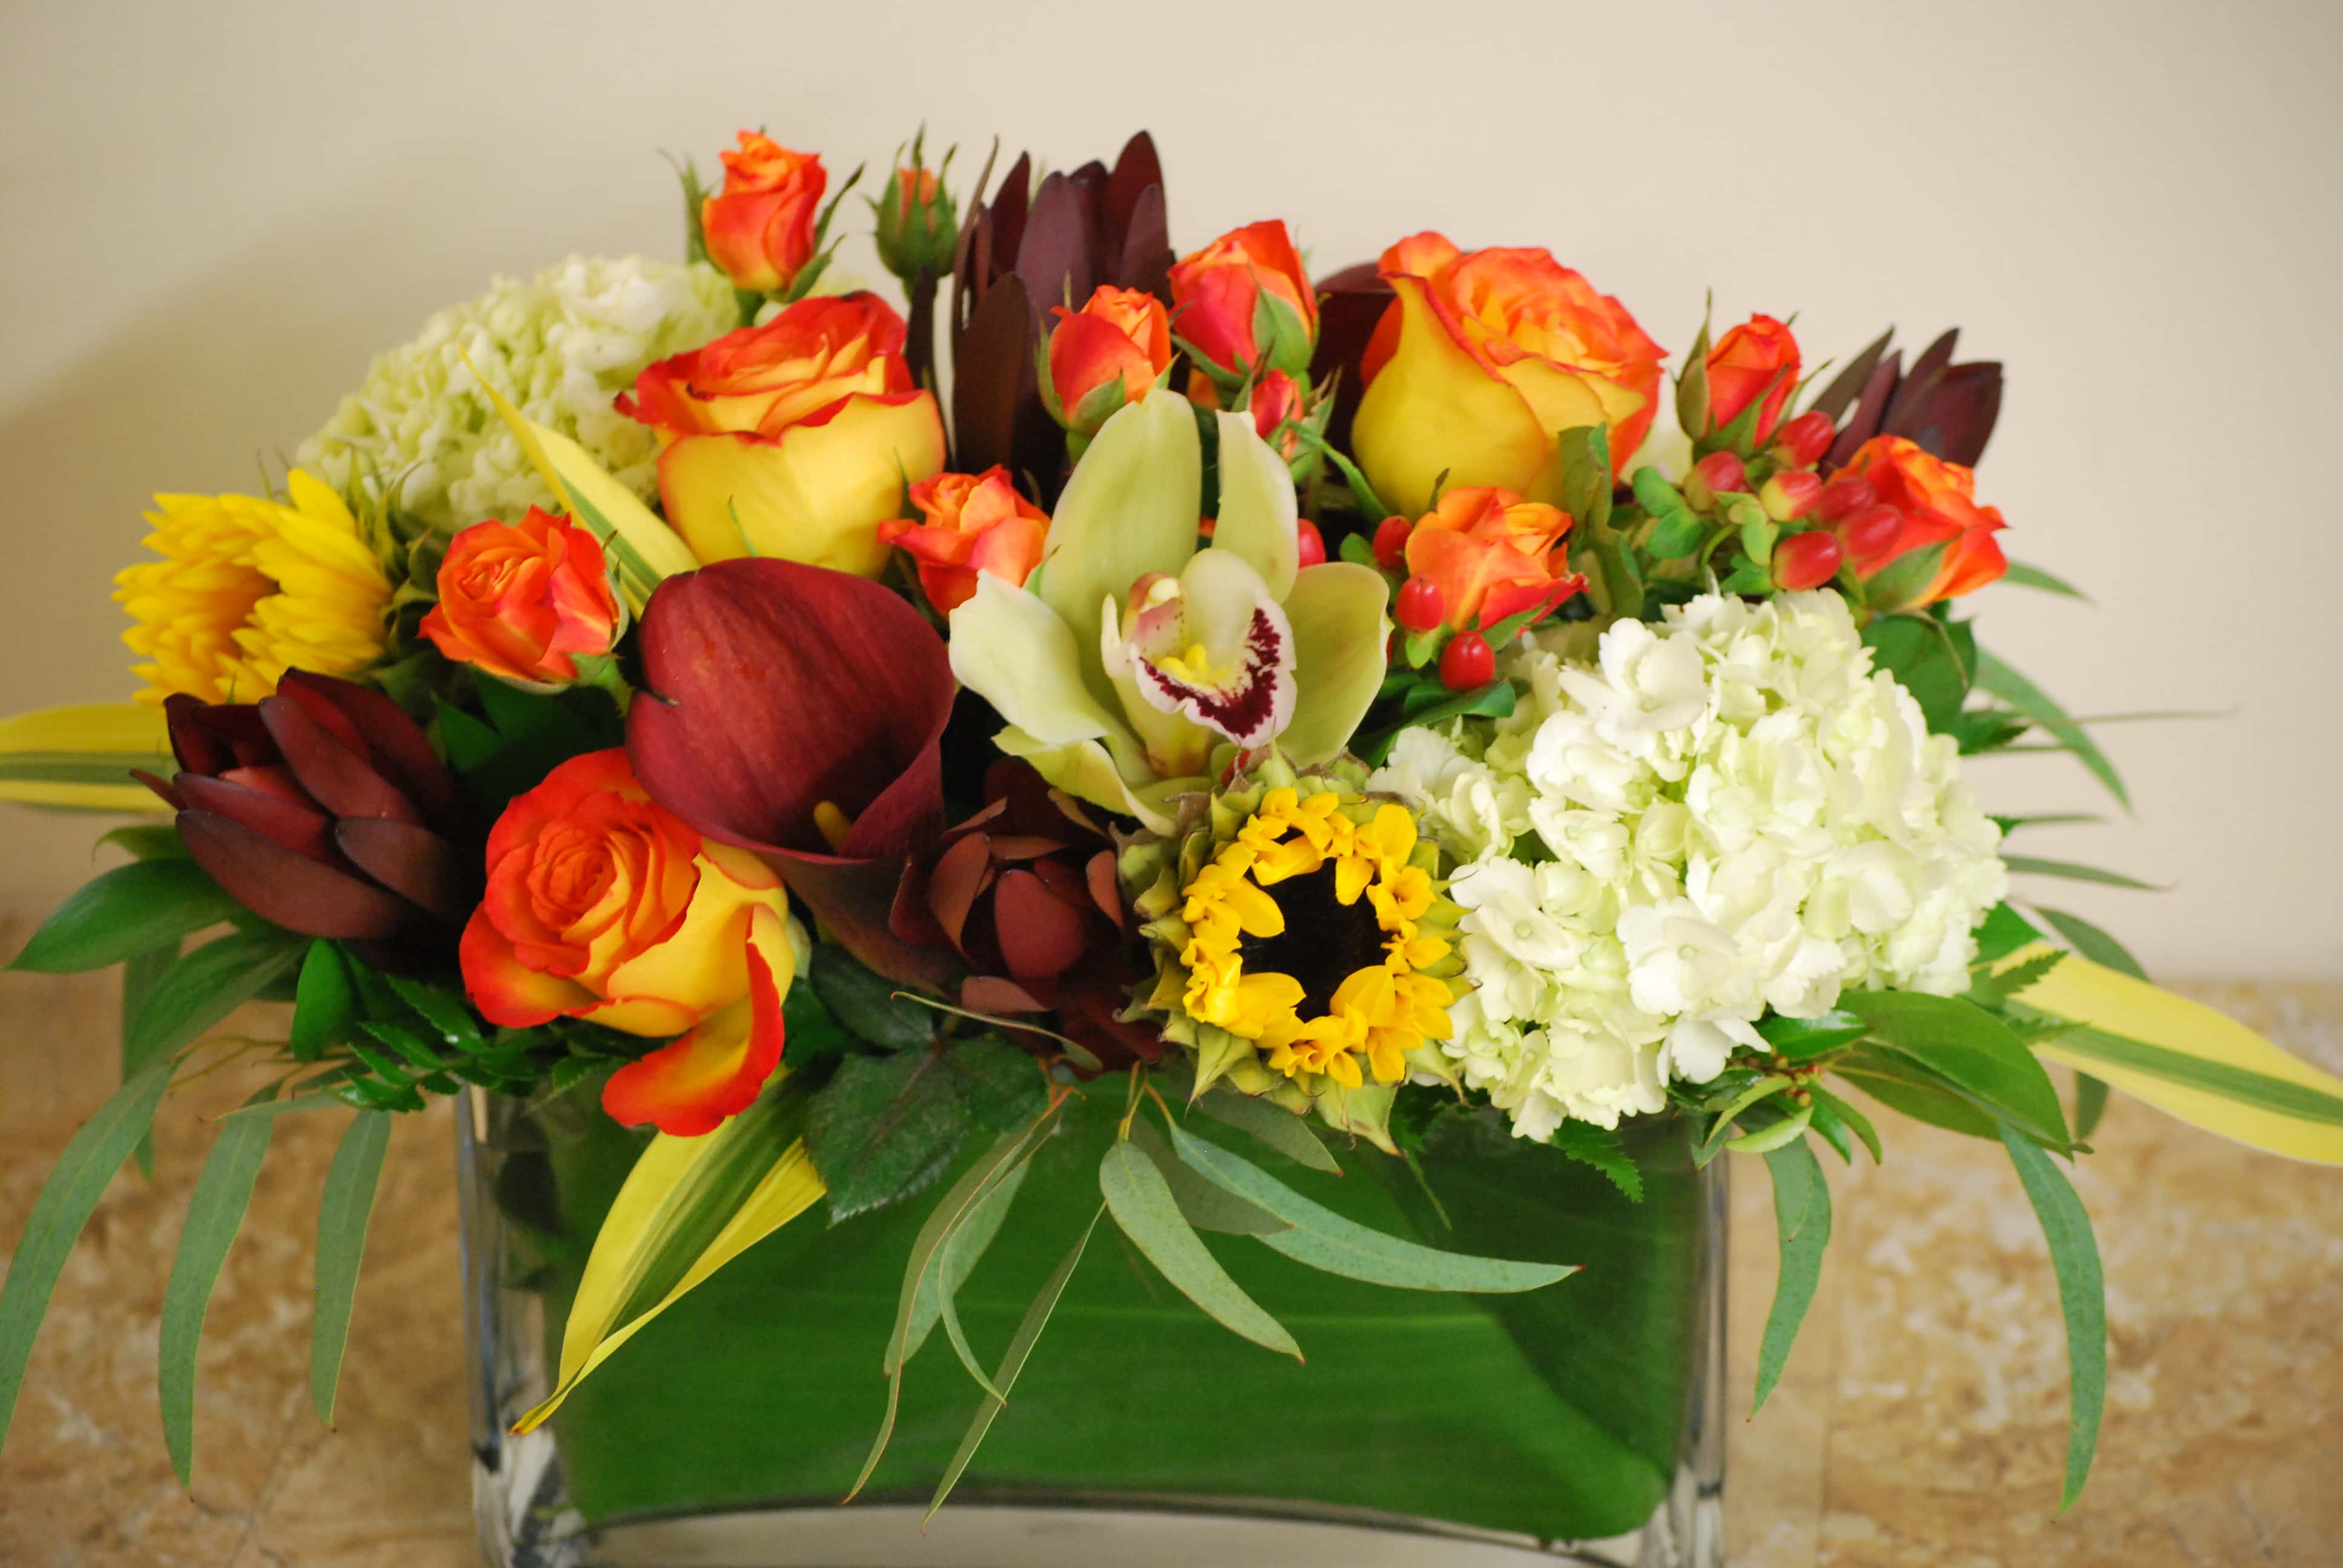 Prevatte Florist - West Palm Beach, FL, US, bereavement flowers